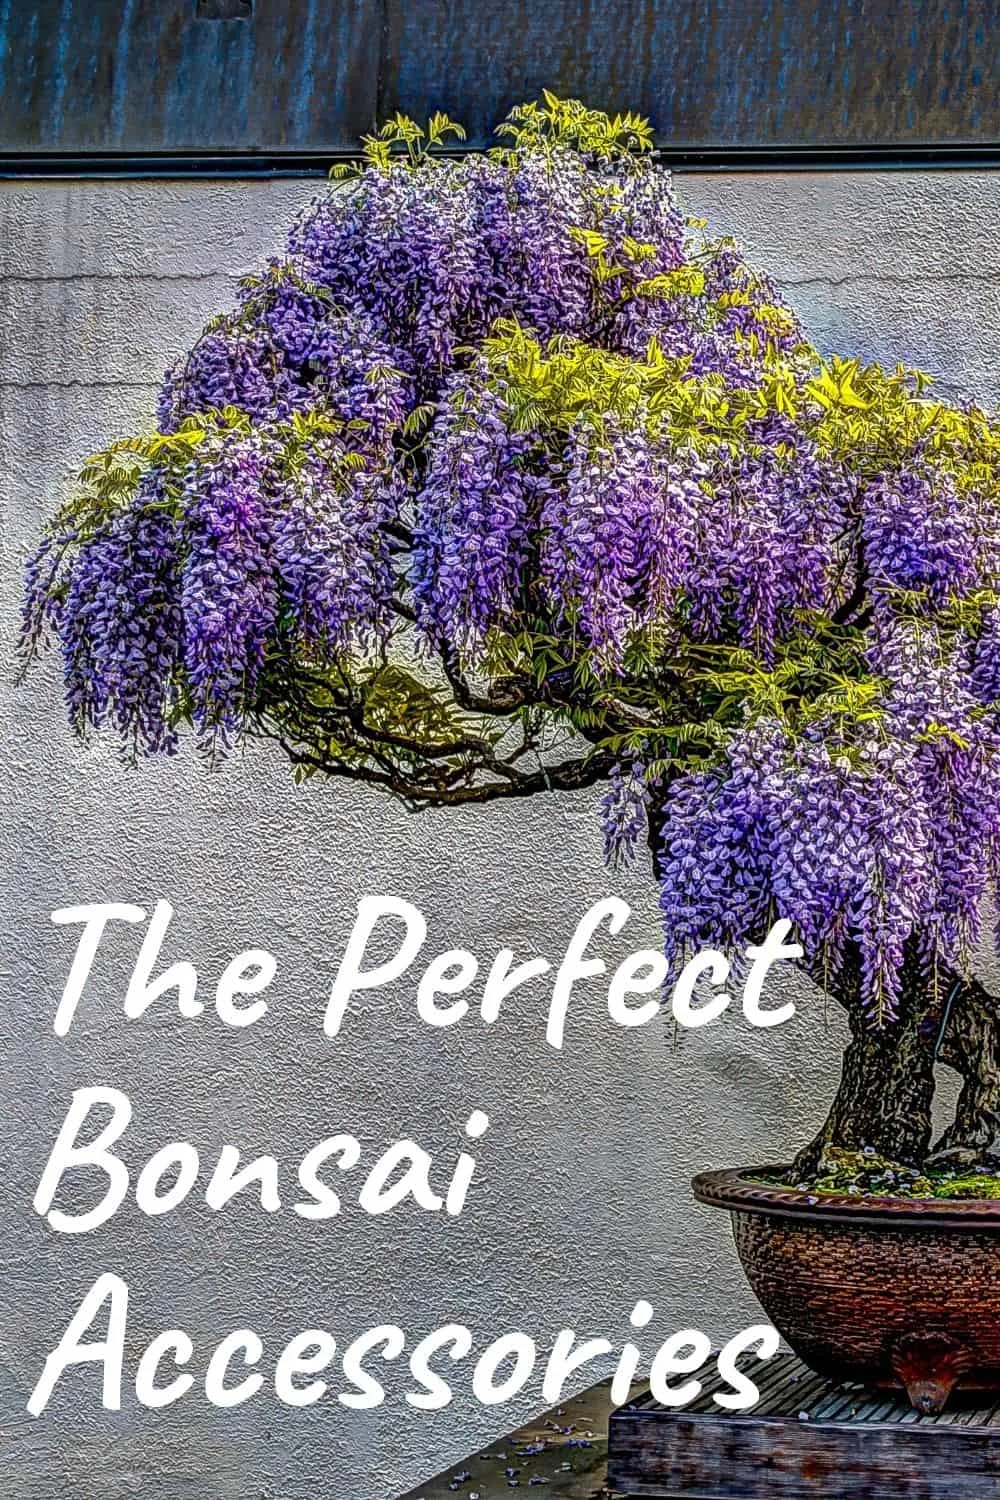 The perfect bonsai accessories